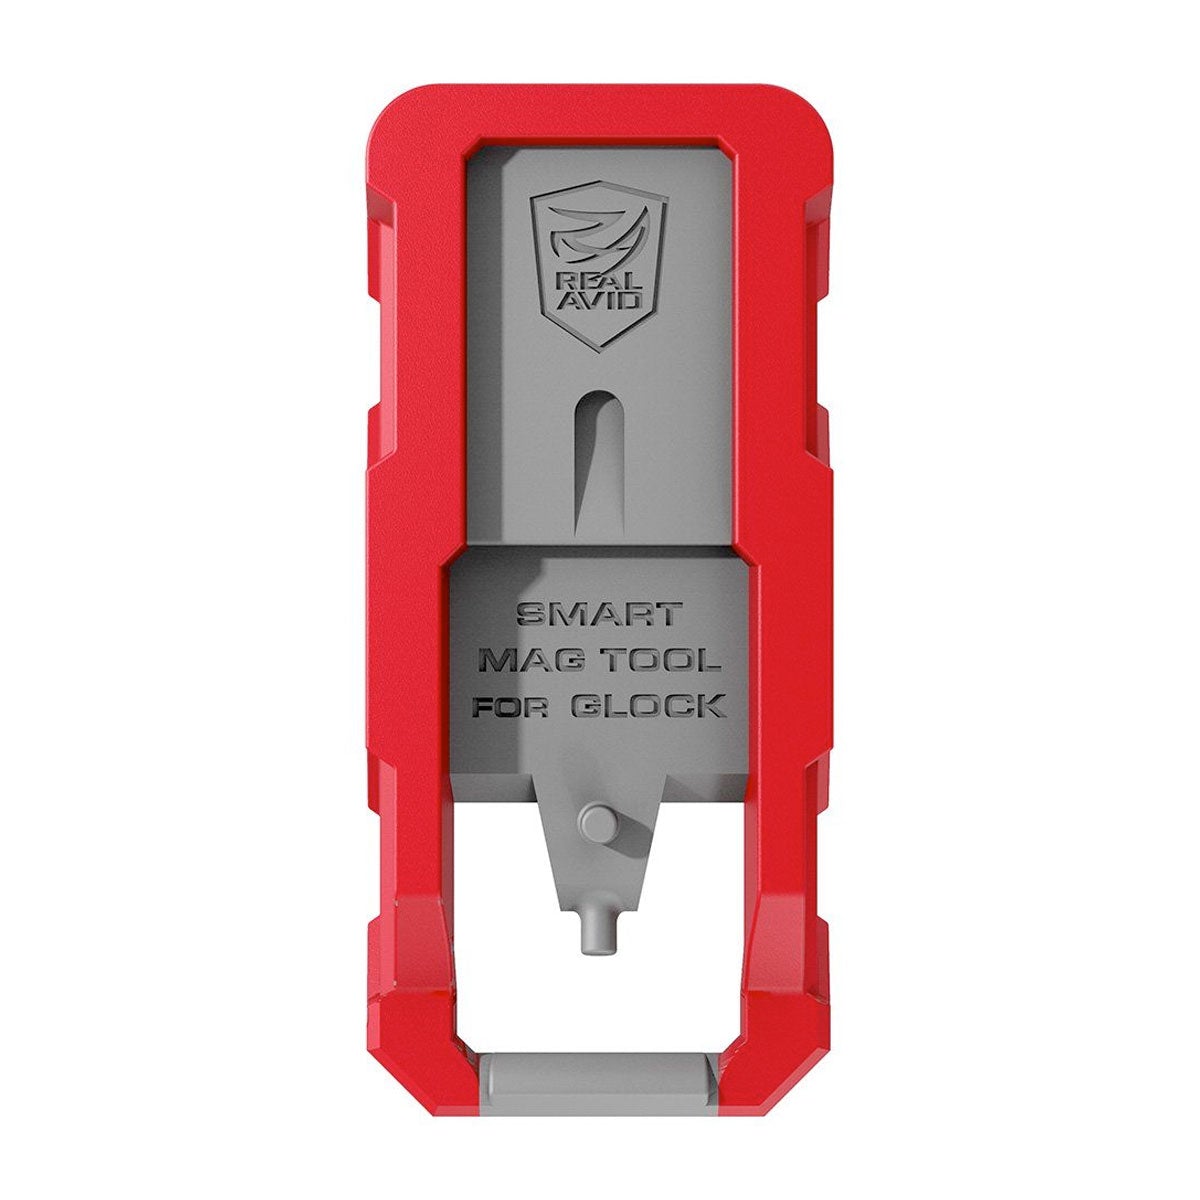 Real Avid Smart Mag Tool for Glock Accessories Real Avid Tactical Gear Supplier Tactical Distributors Australia